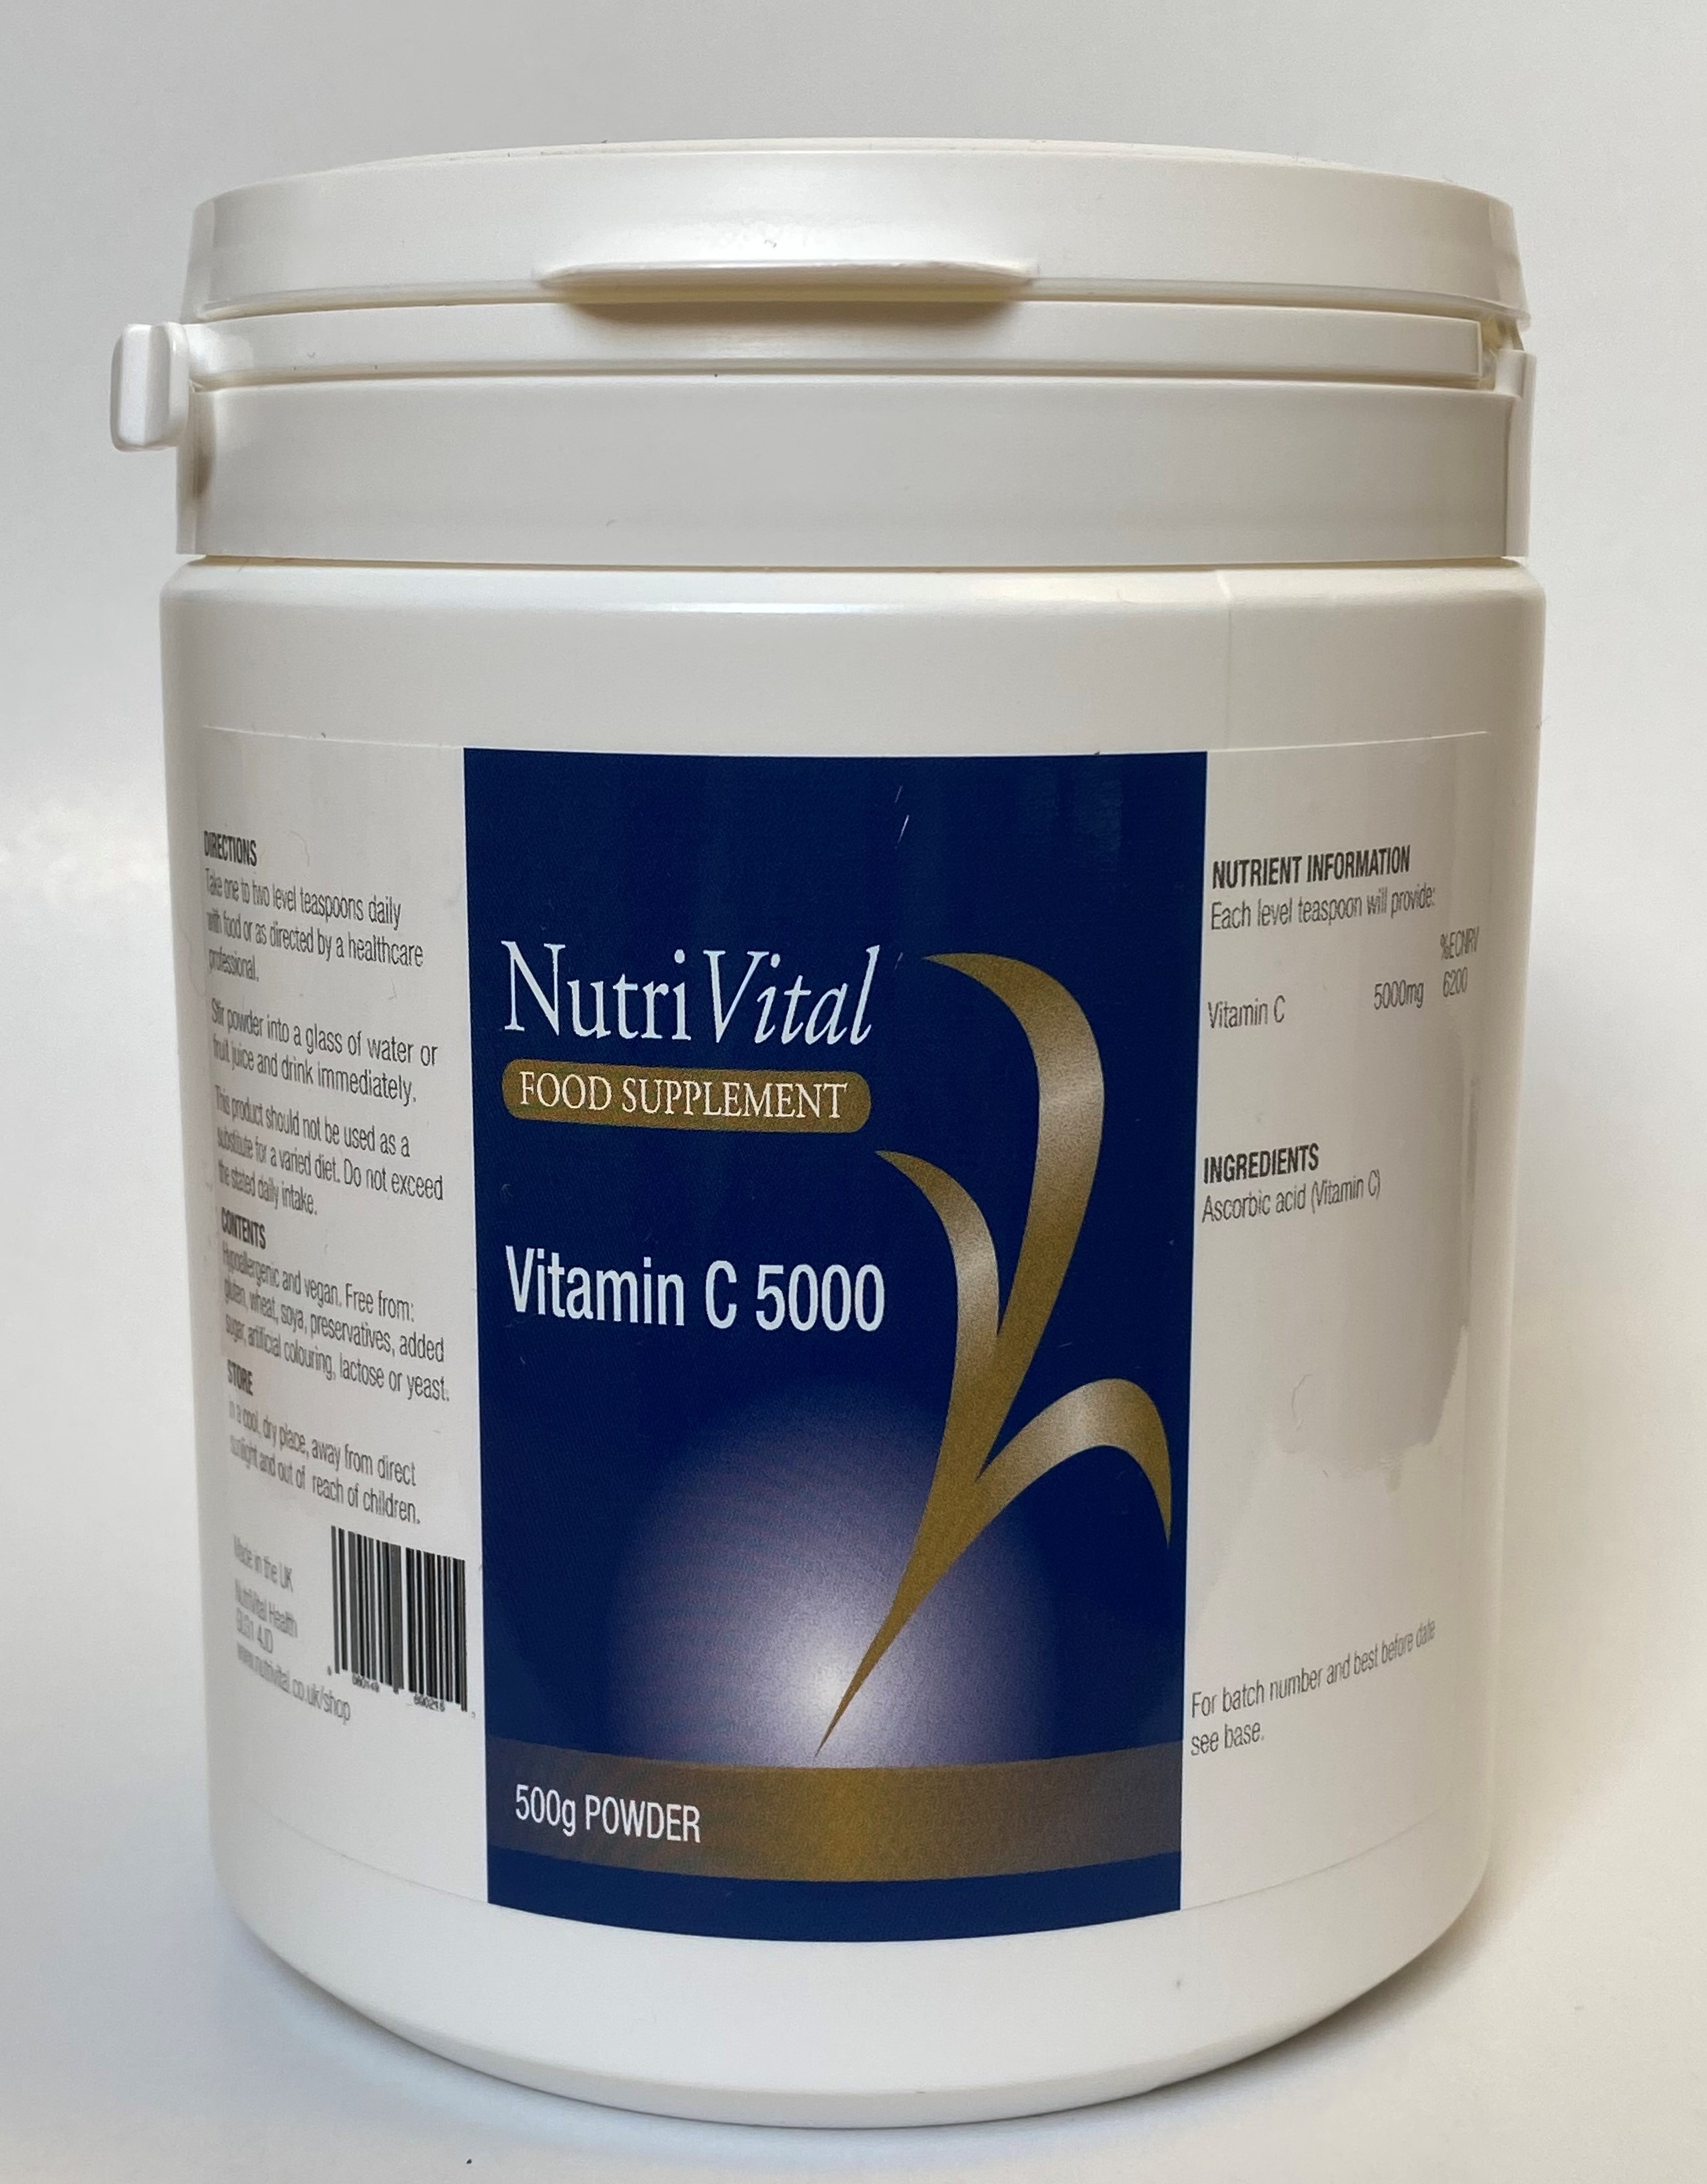 NutriVital Vitamin C 5000 powder